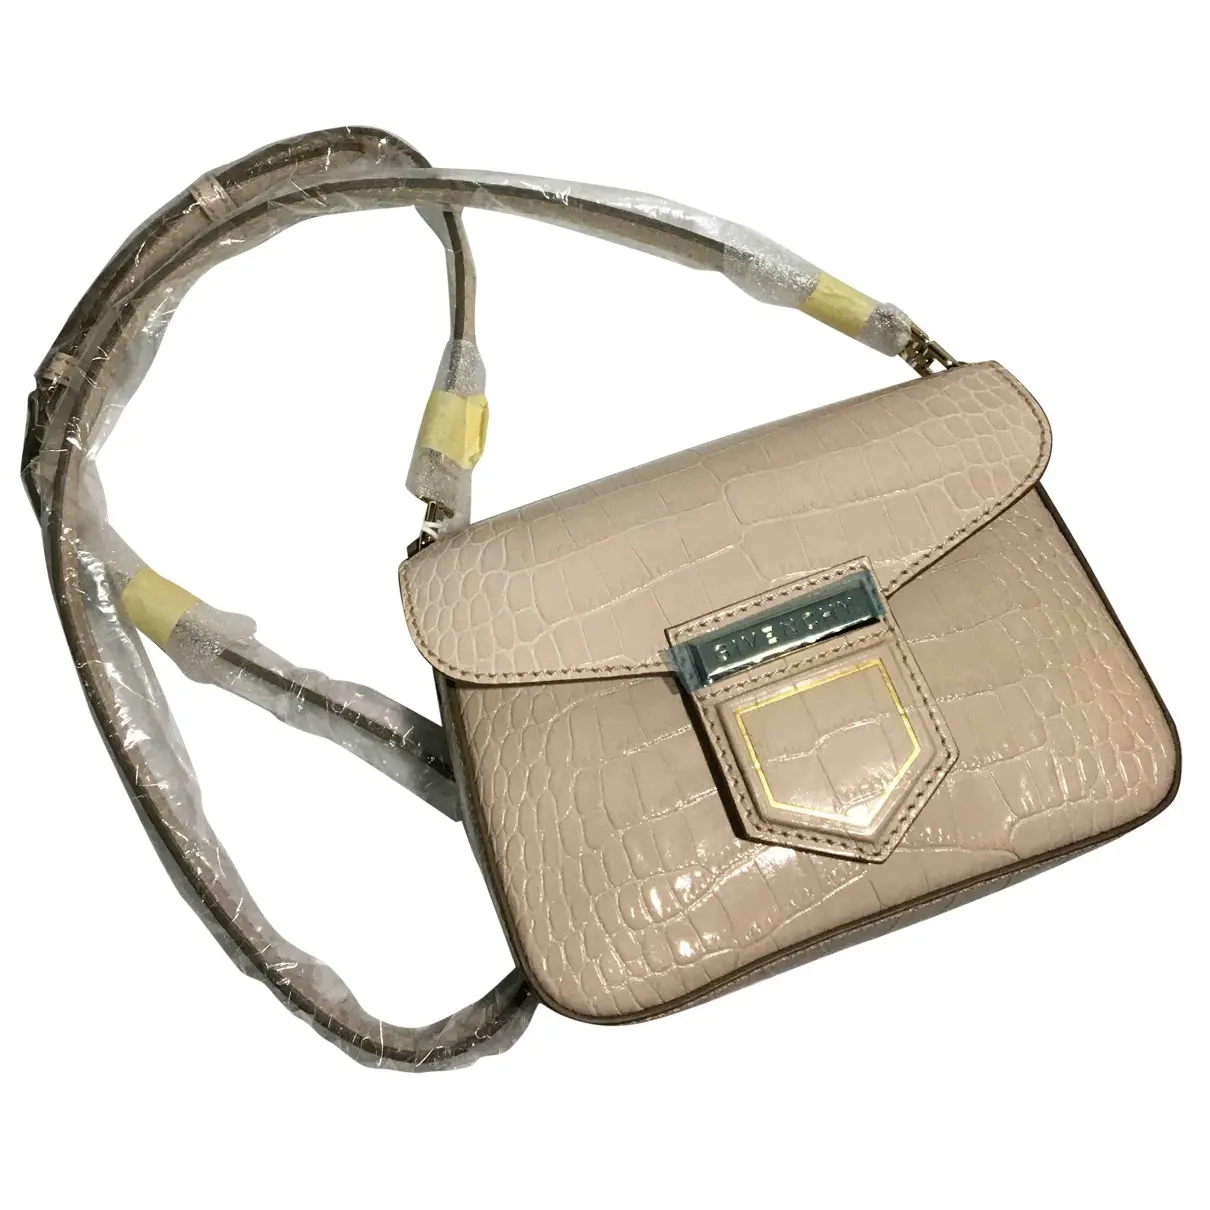 Nobile leather handbag Givenchy